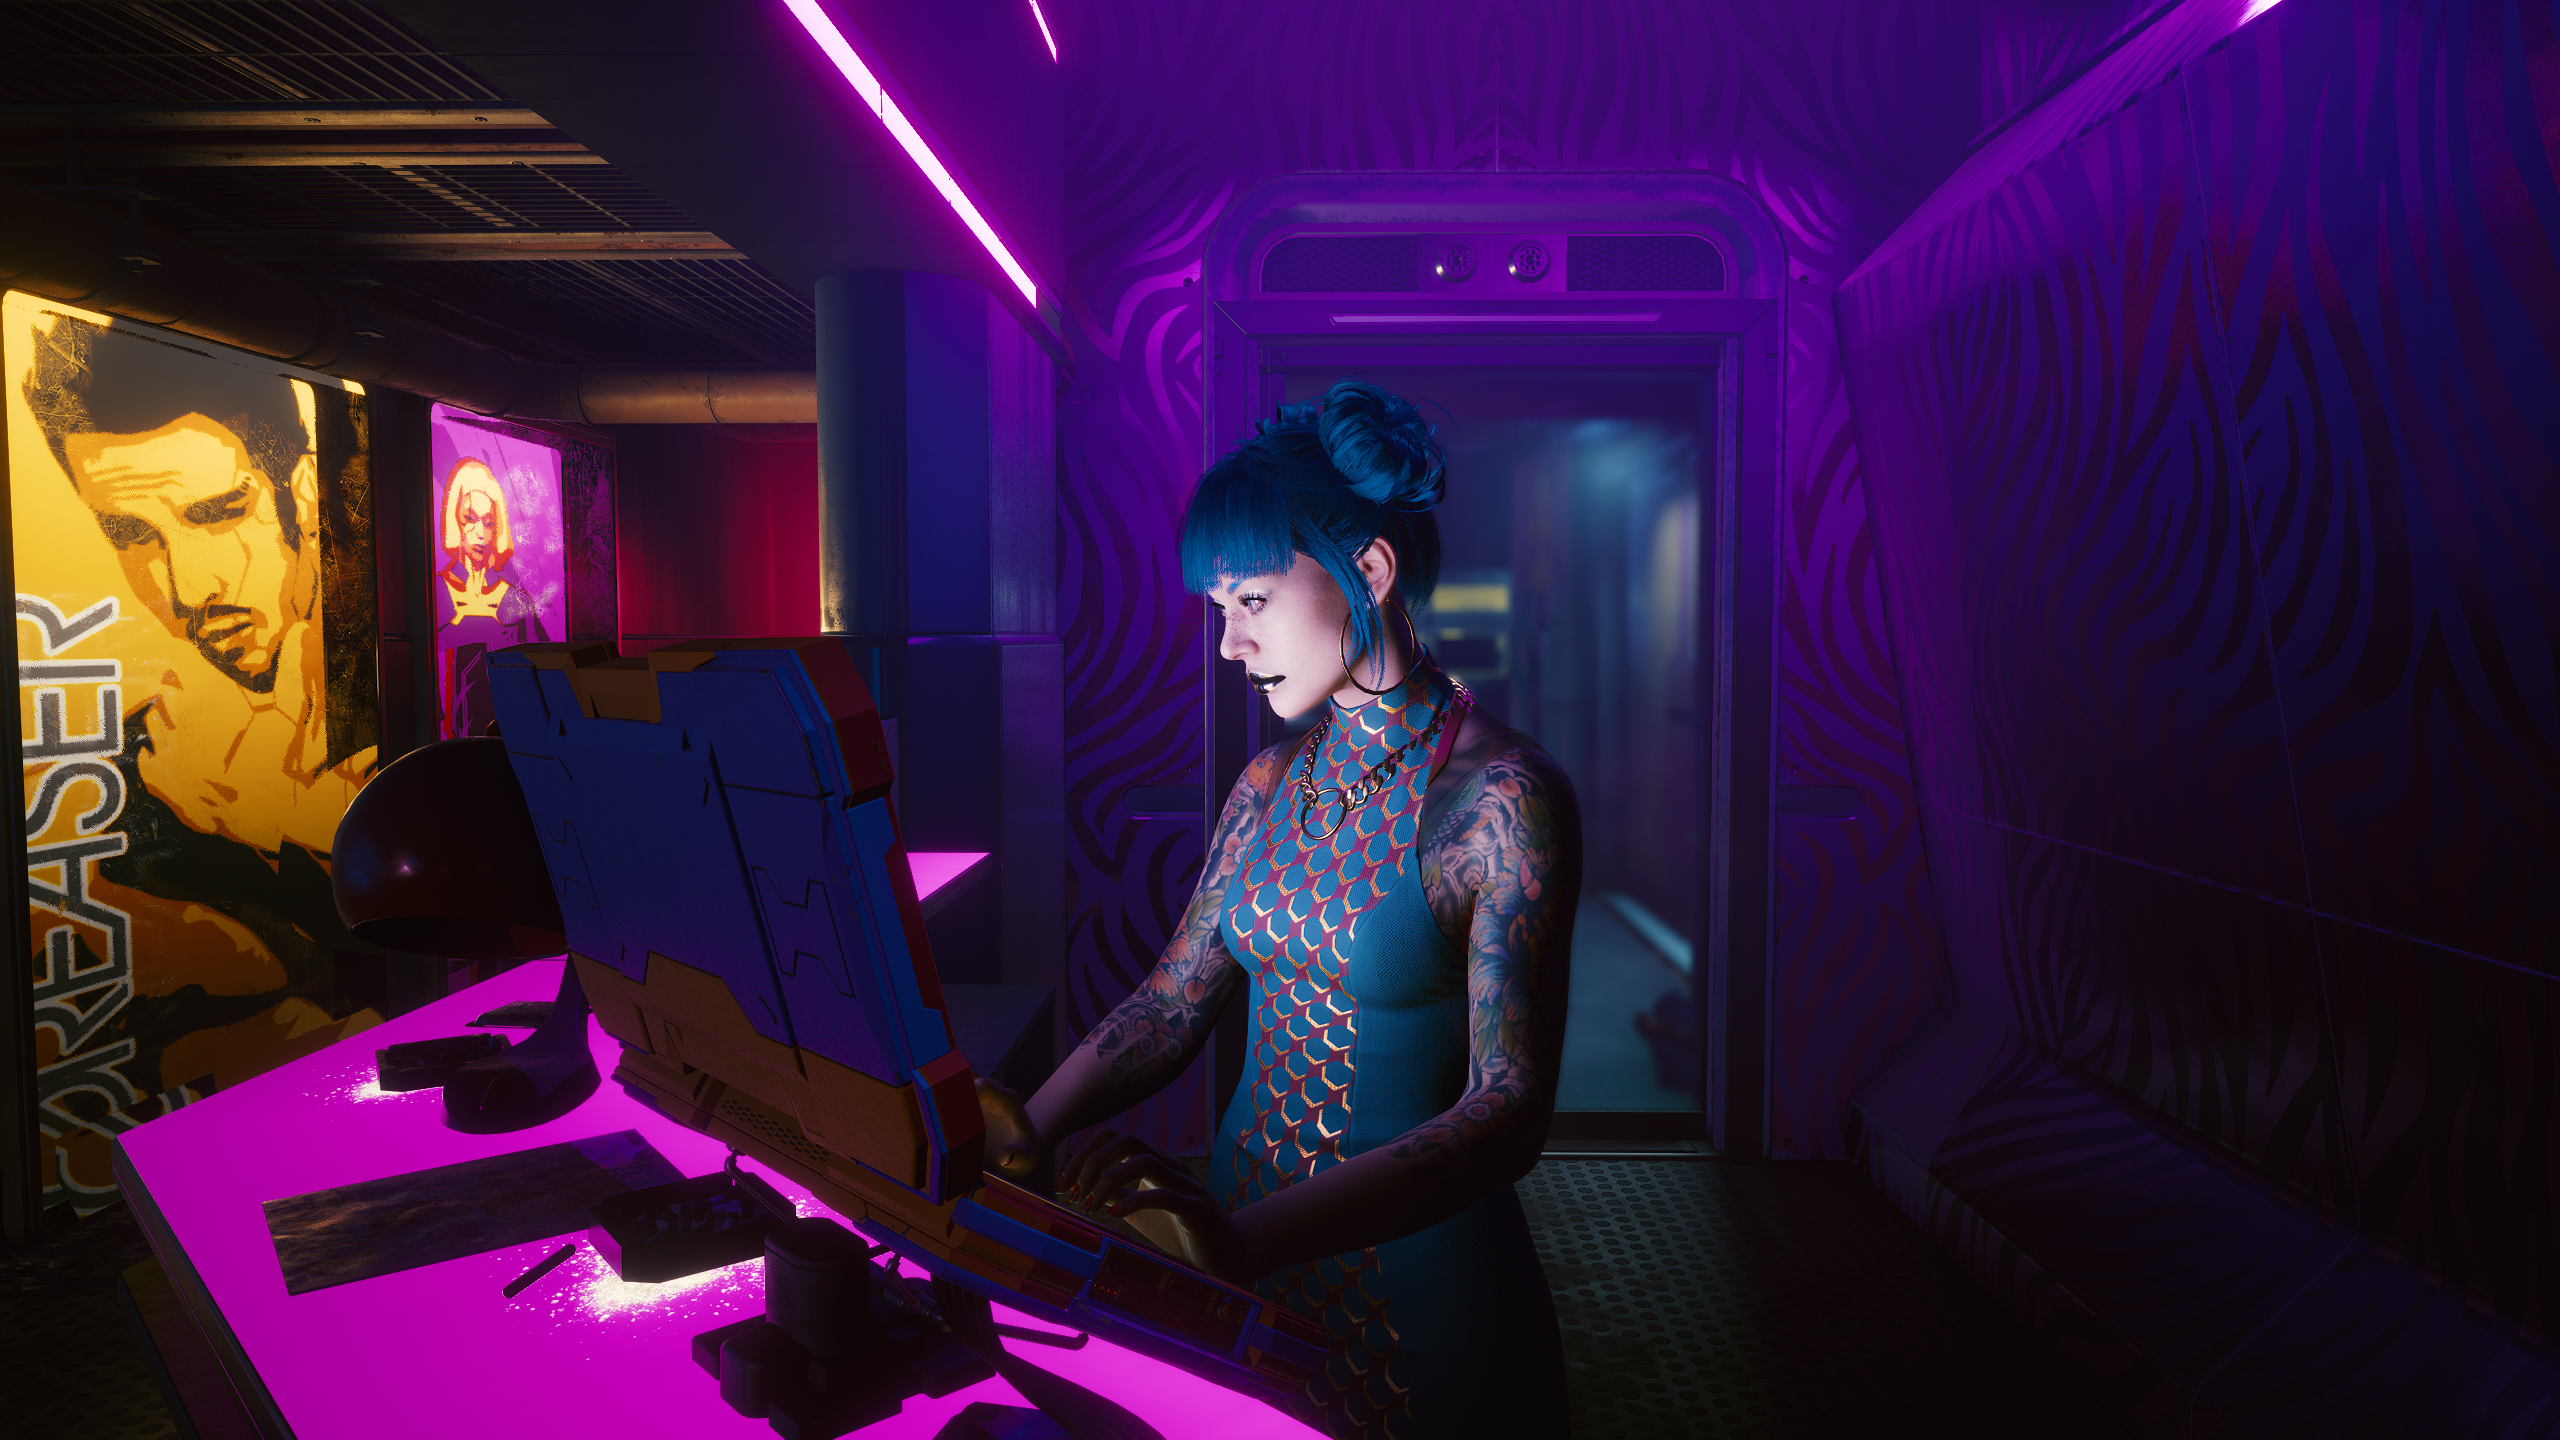 General 2560x1440 Cyberpunk 2077 screen shot video games PC gaming women inked girls blue hair